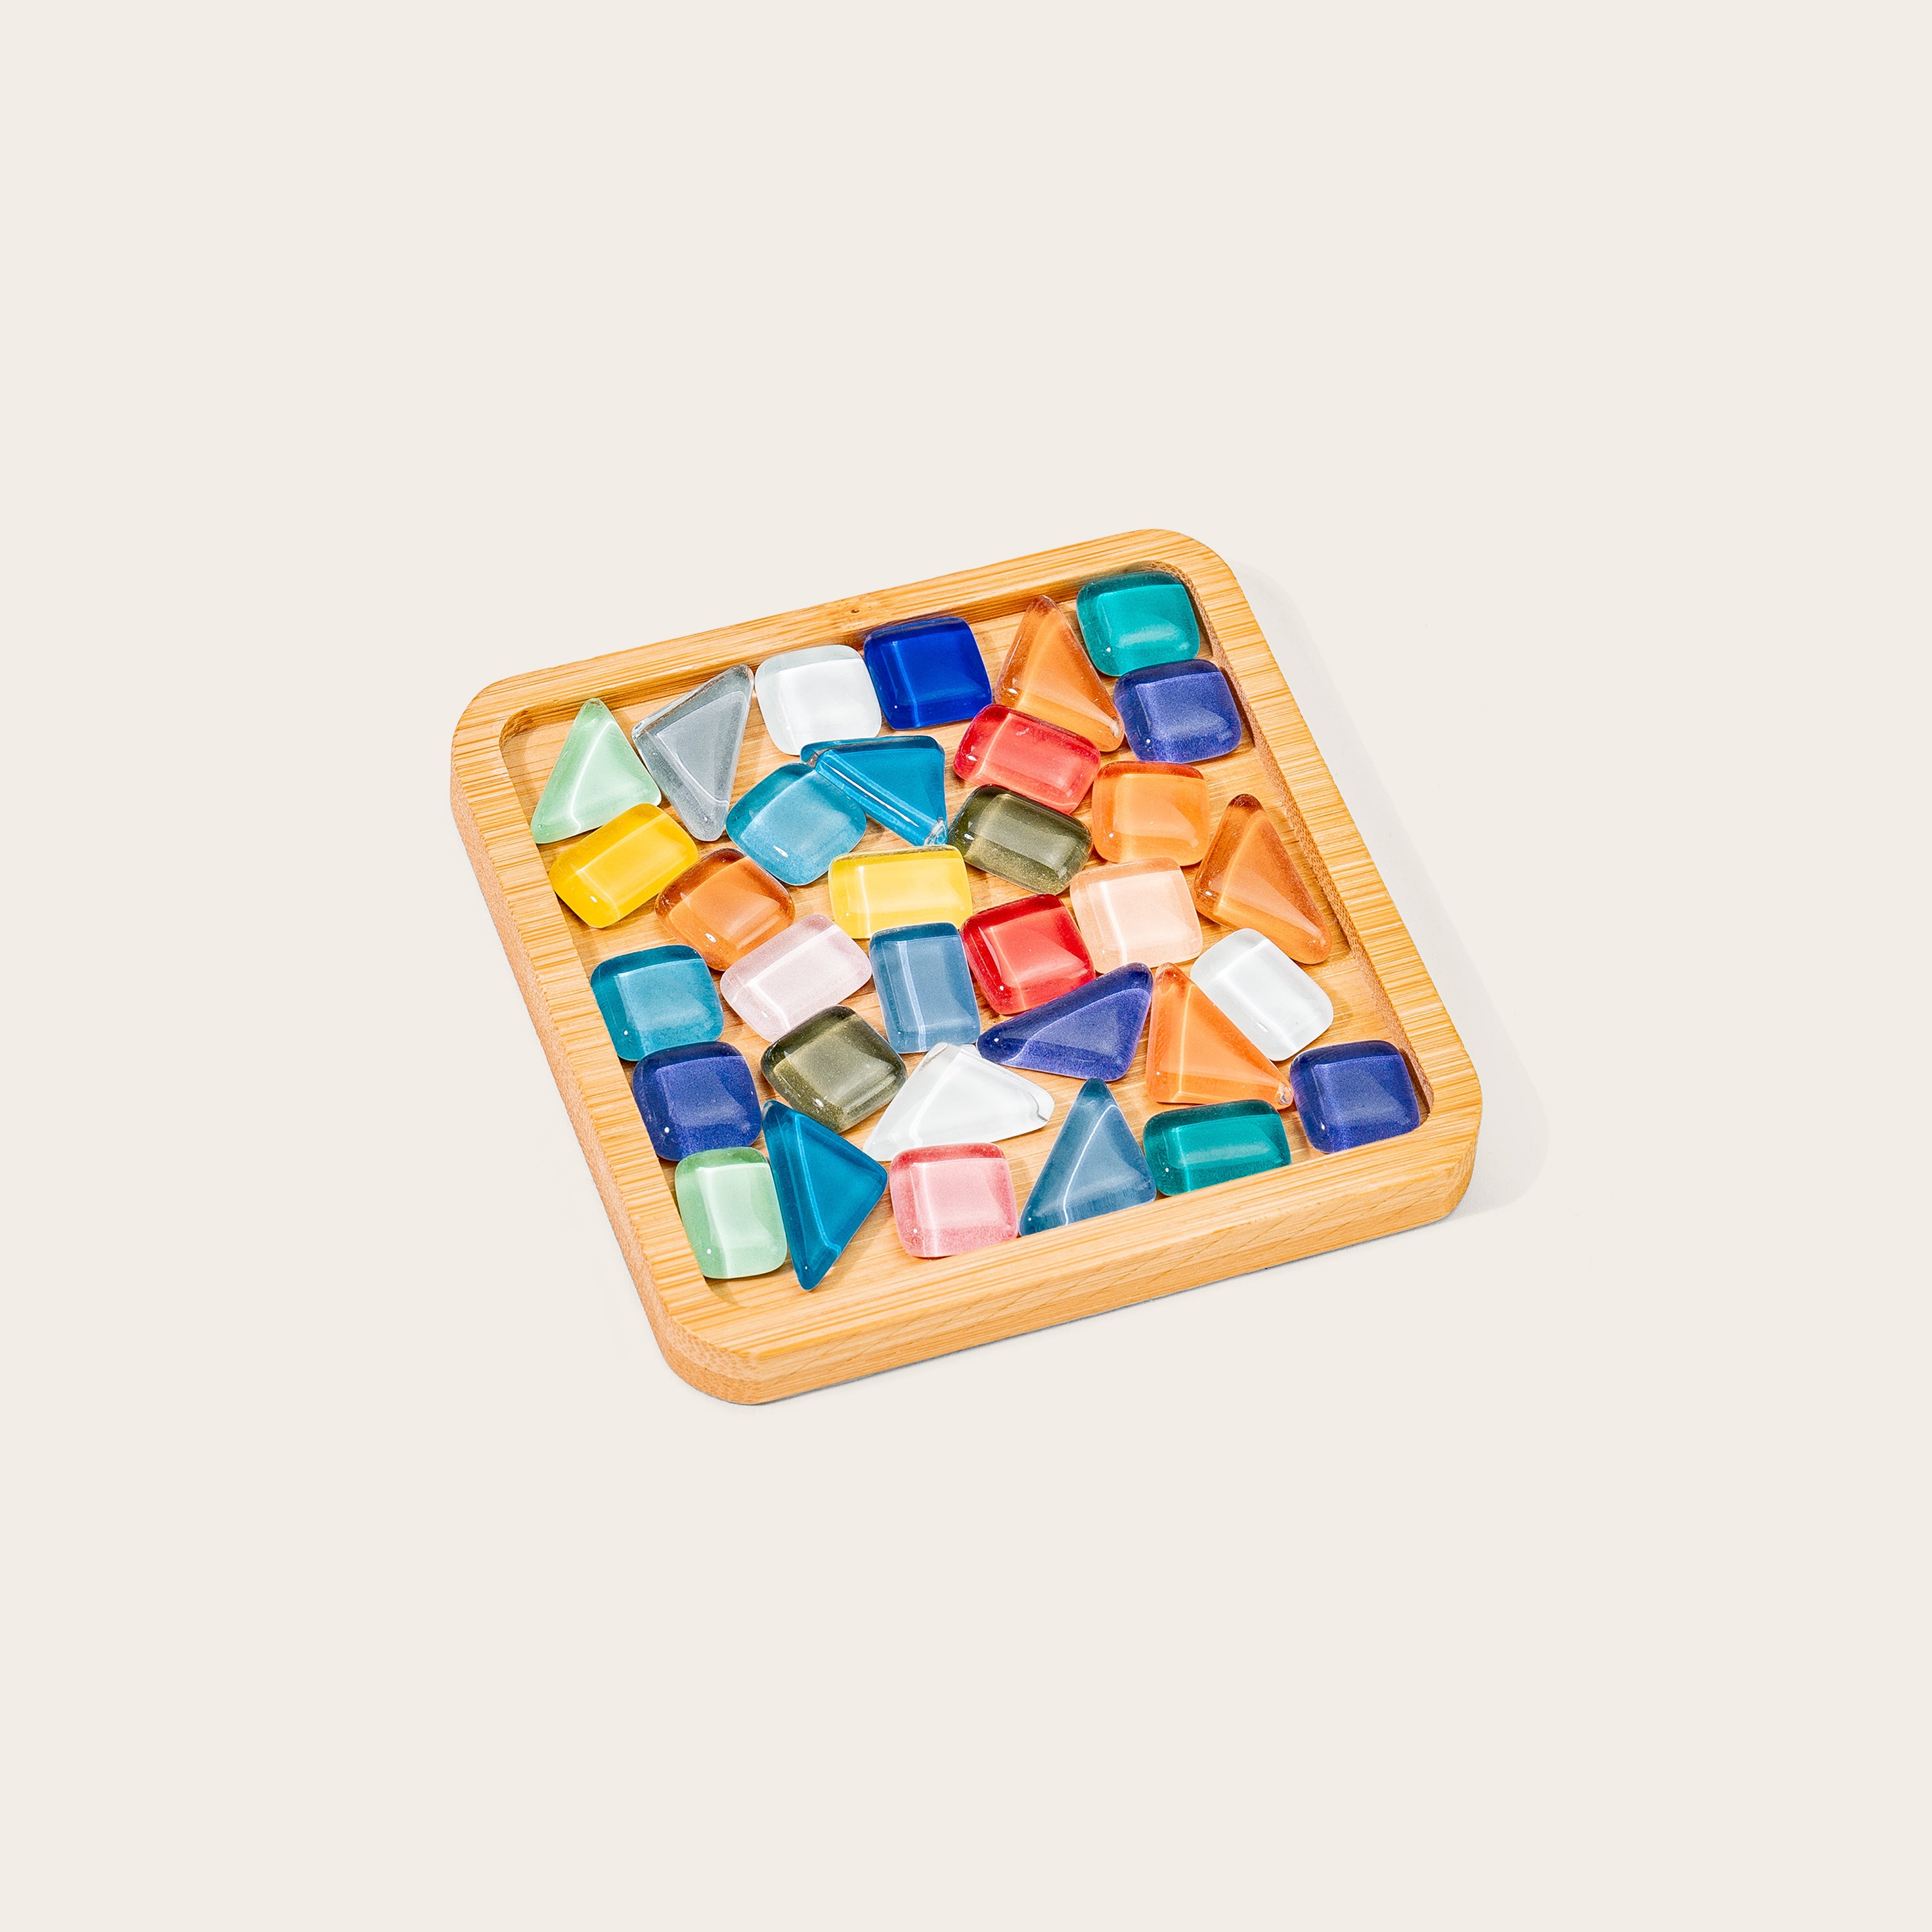 Sculpd Kids Mosaics Craft Kit